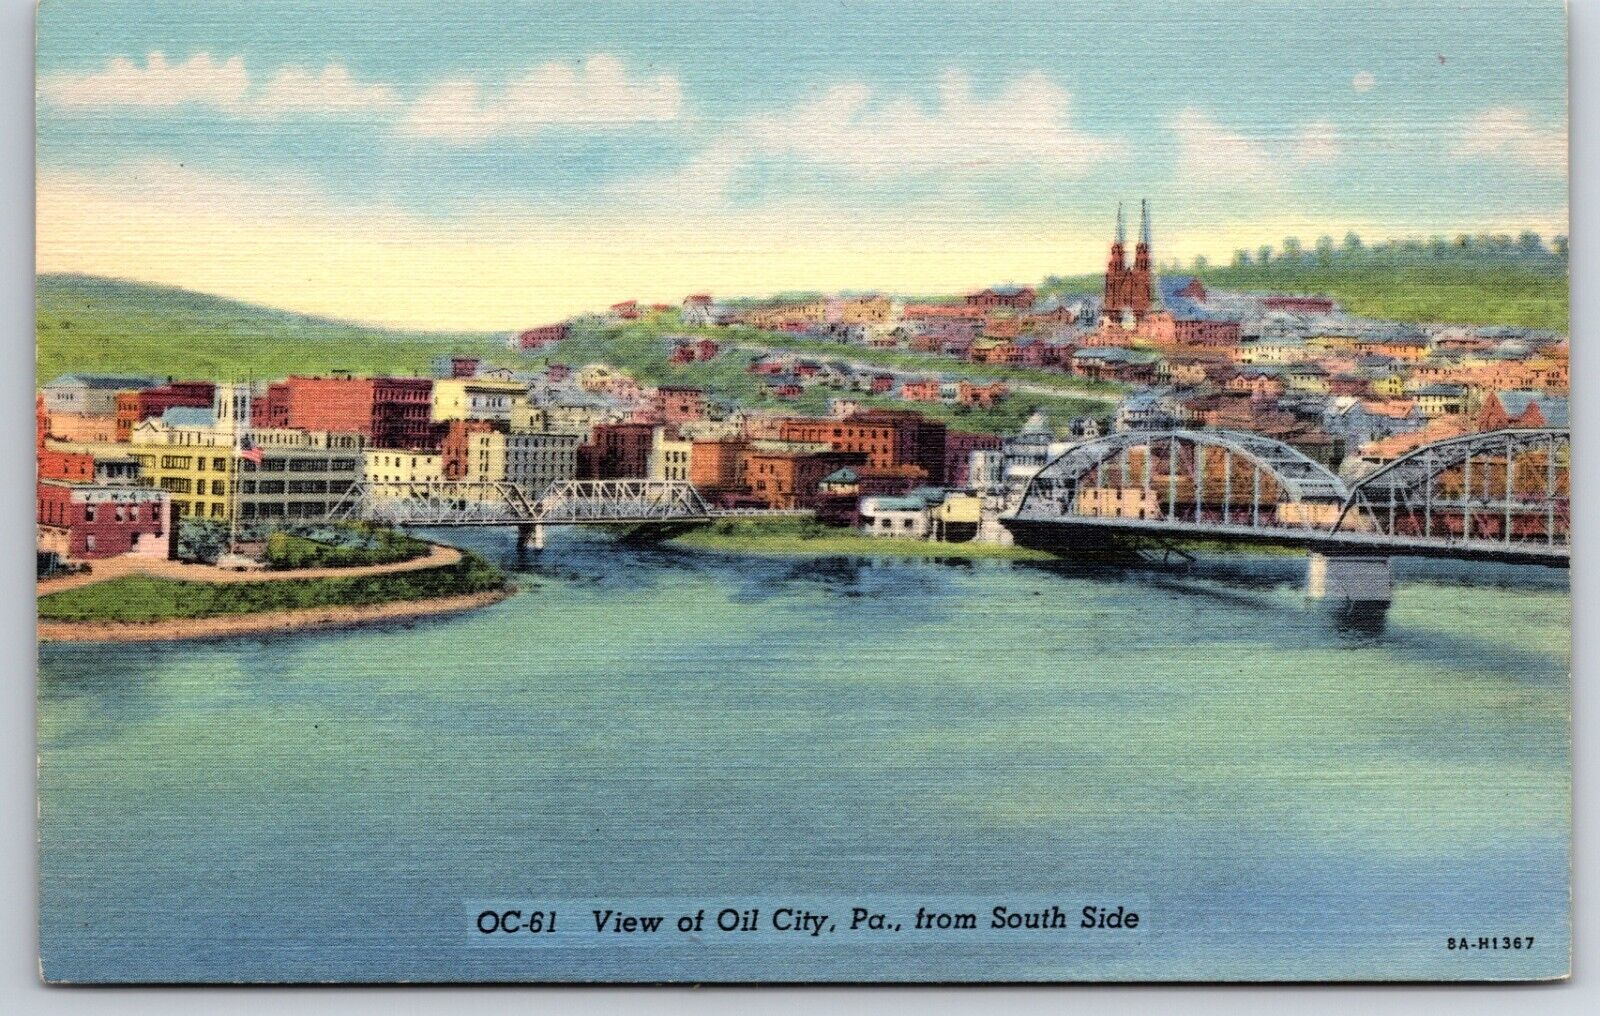 Oil City Pennsylvania PA 1938 South Side View CURT TEICH Linen Postcard